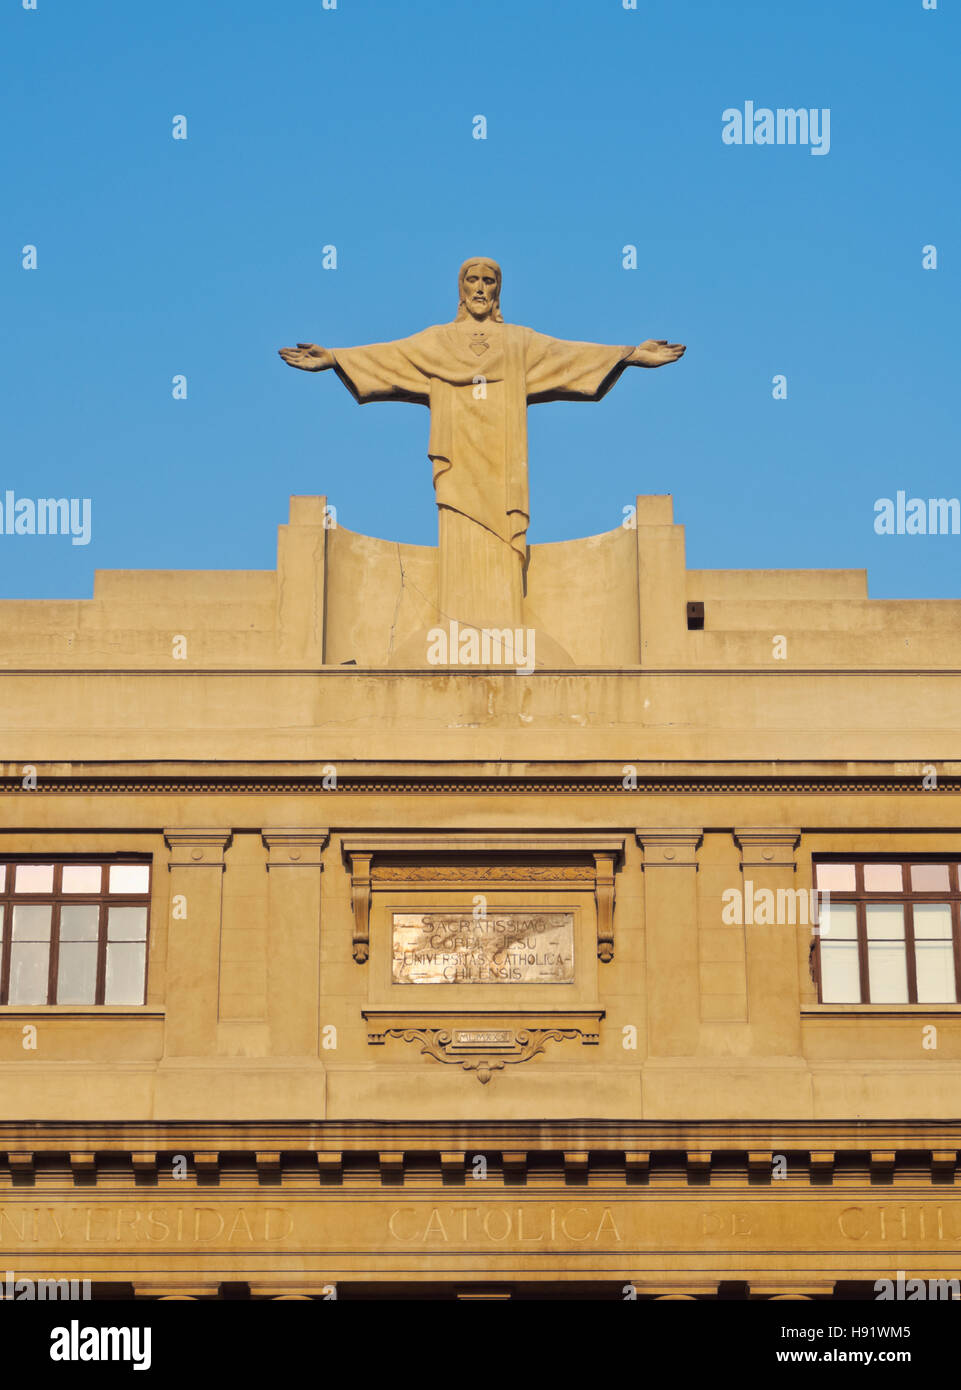 Chile, Santiago, Liberador Avenue, View of the headquarters of the Pontifical Catholic University of Chile. Stock Photo